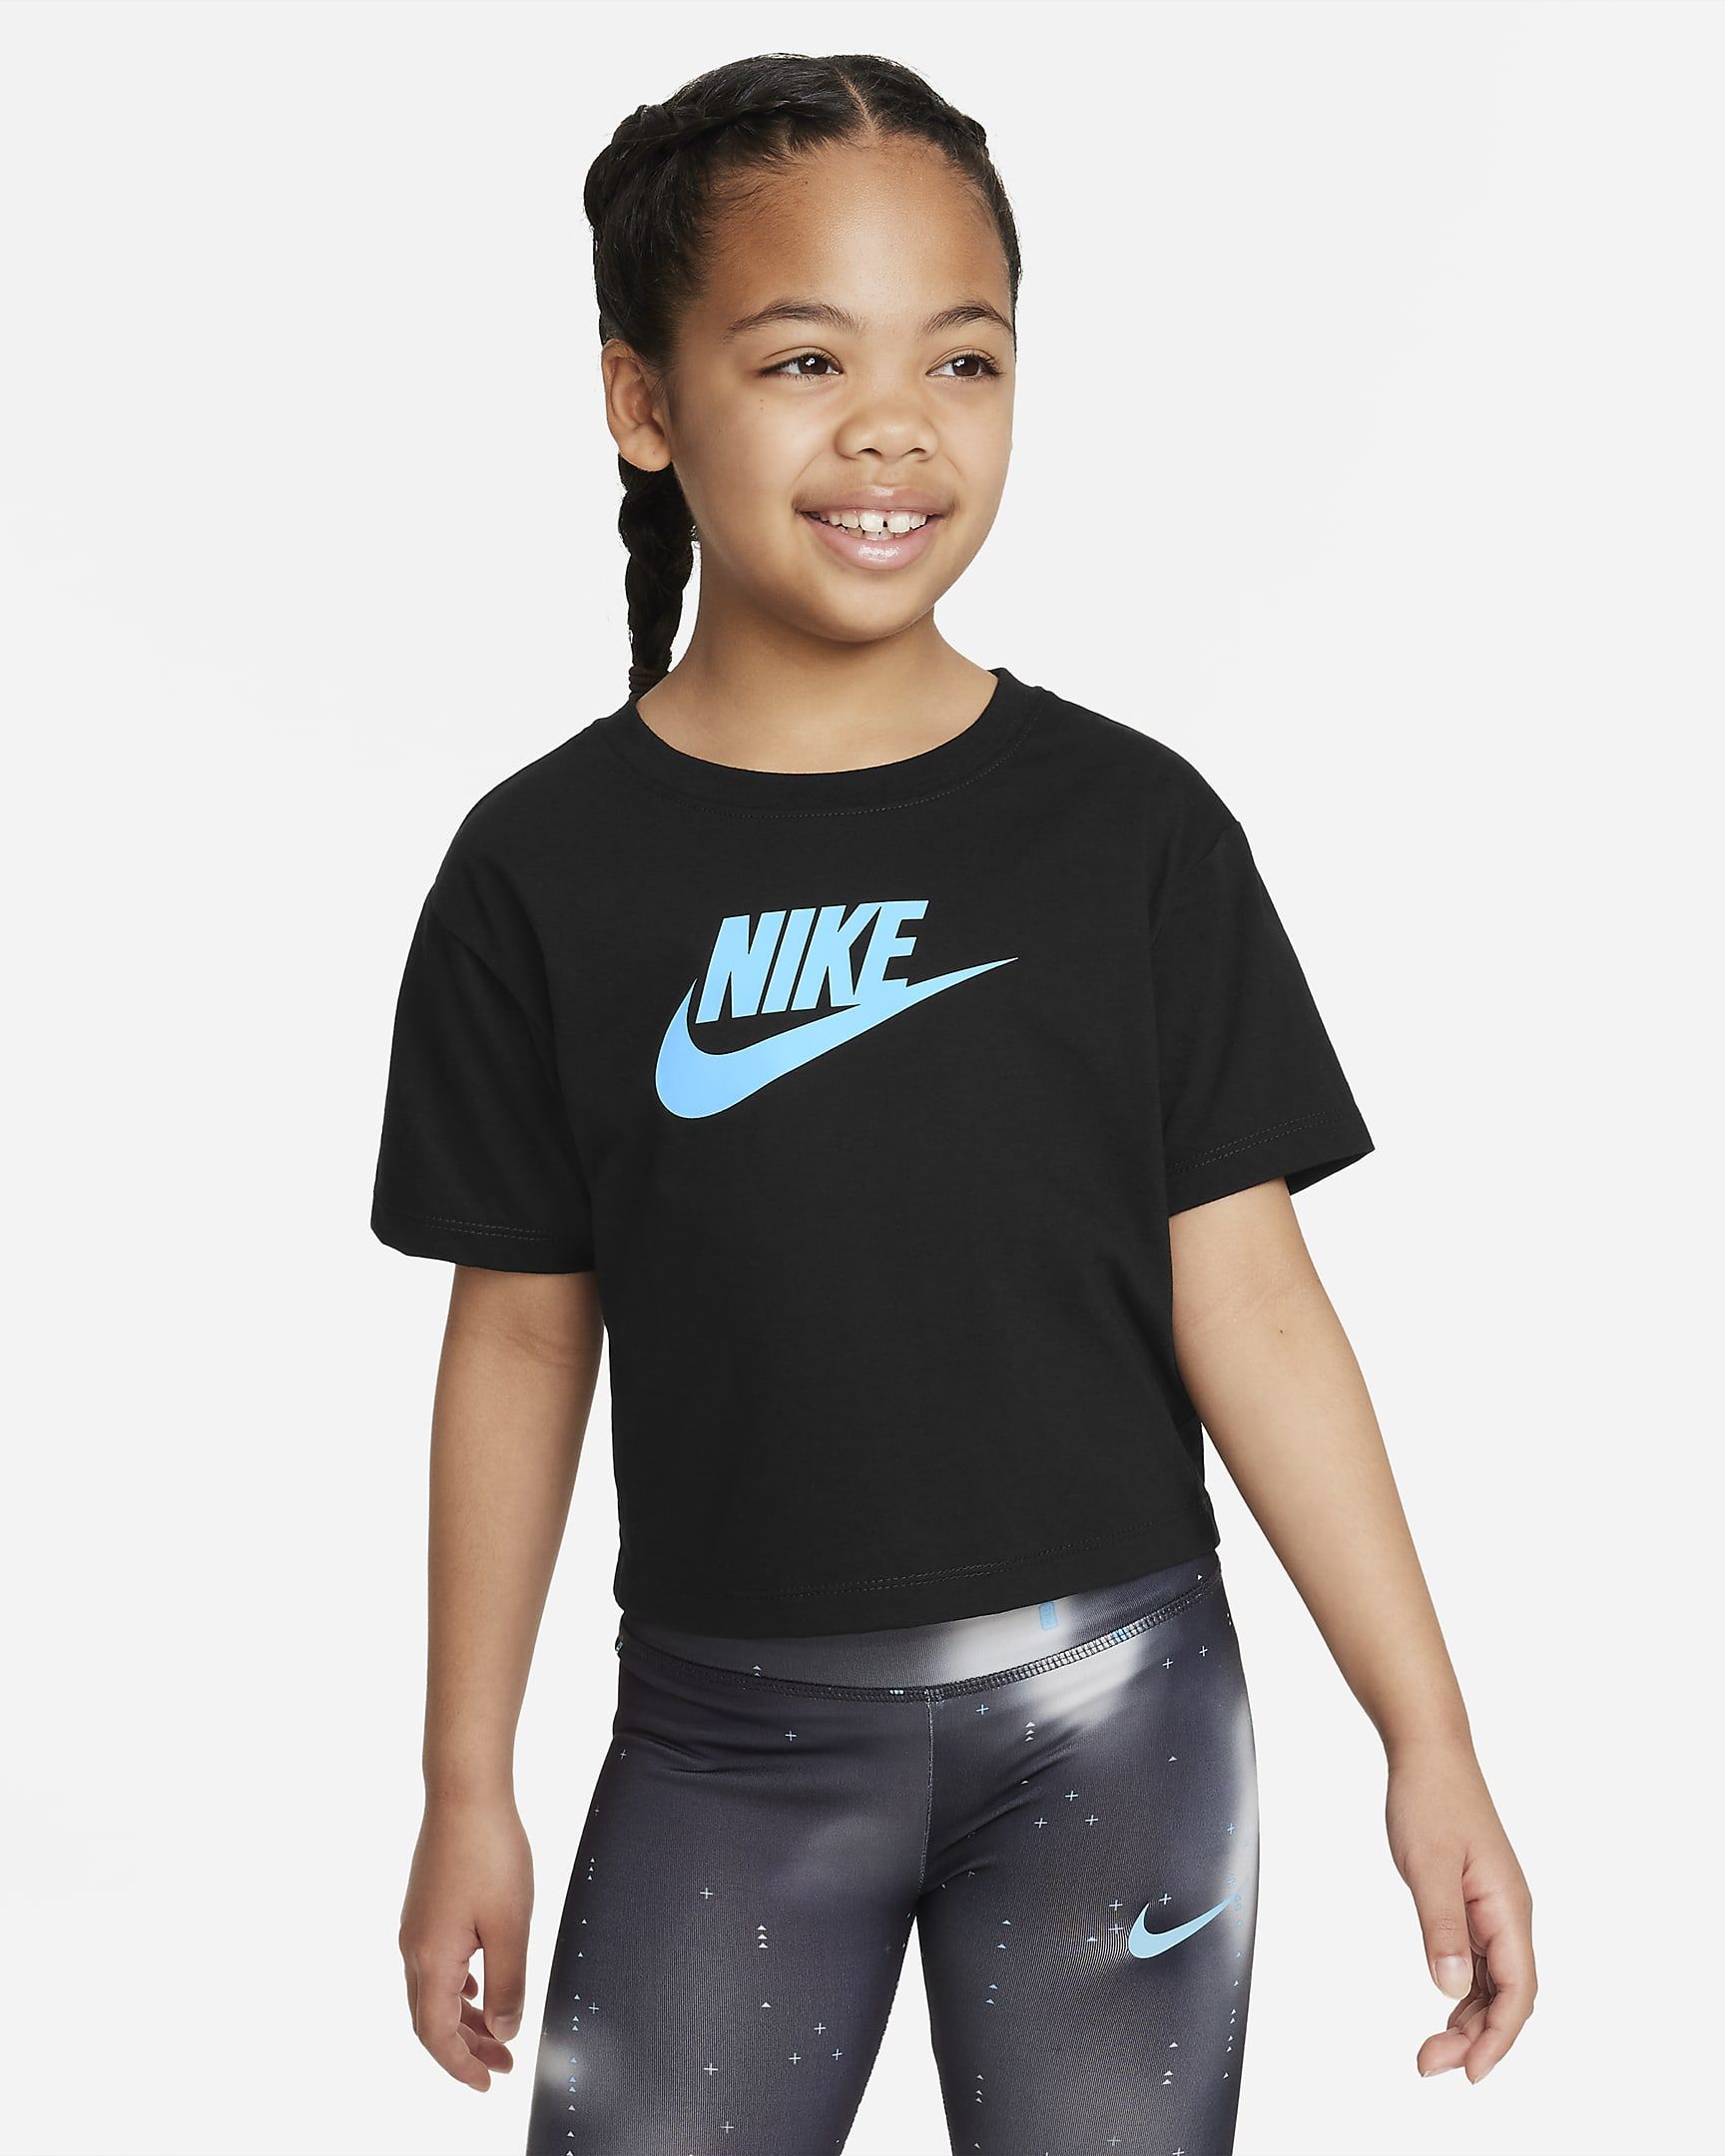 Nike Little Kids' T-Shirt. Nike.com | Nike (US)